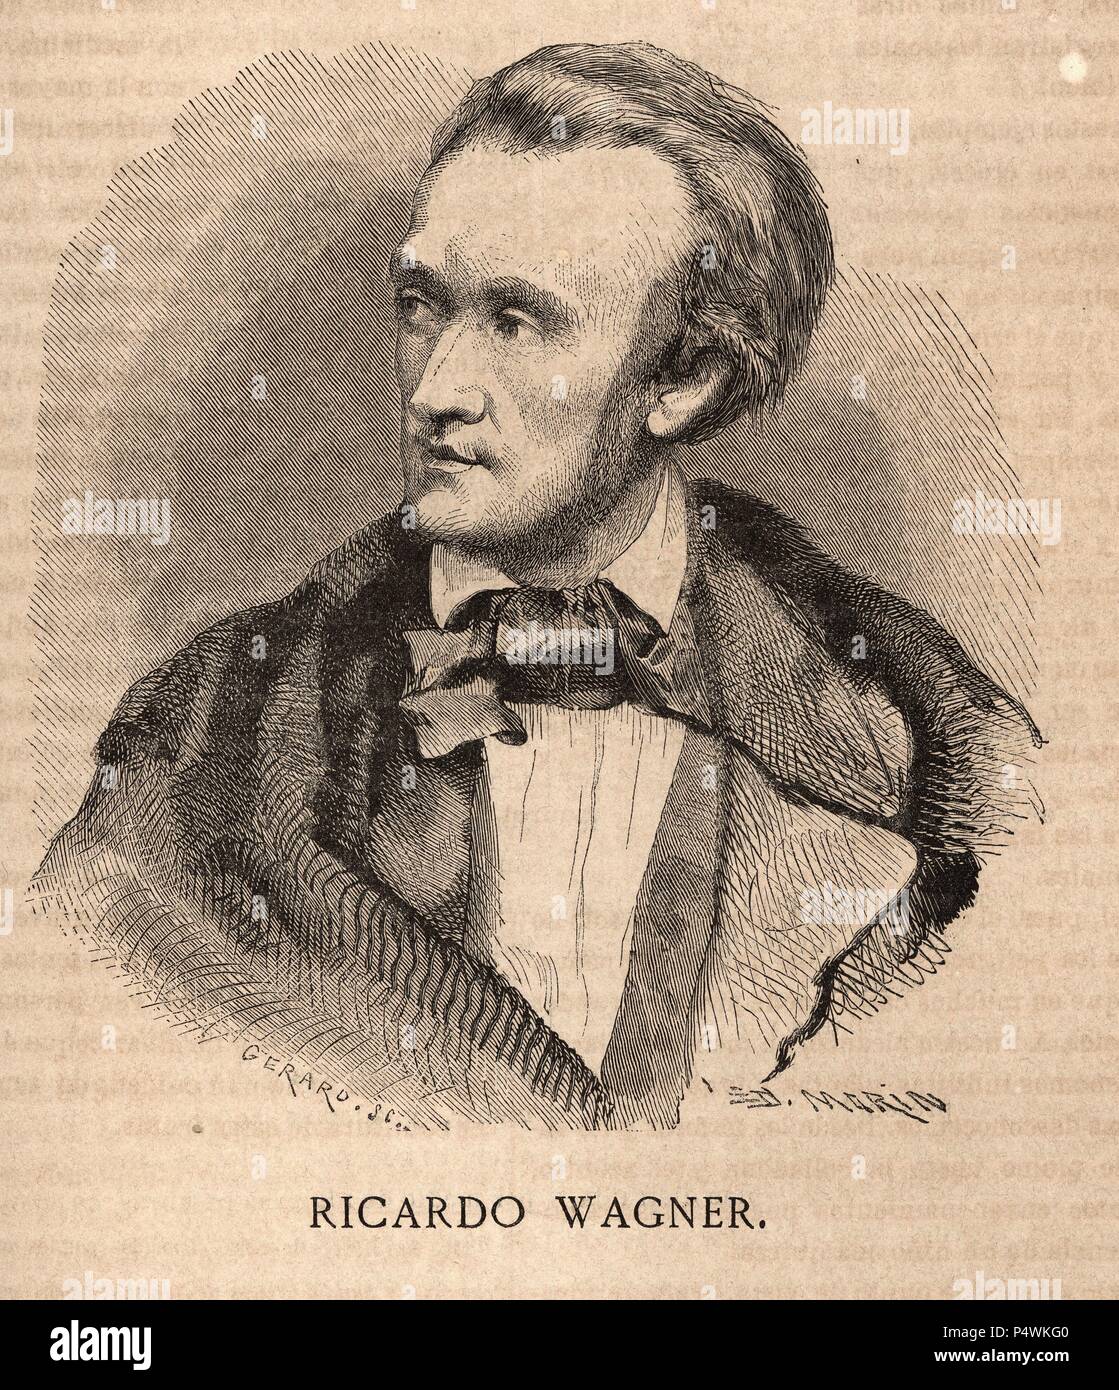 Richard Wagner (Lipsia 1813-Venecia, 1883) Compositor de óperas alemán: Rienzi, El Holandés errante, Tannhäuser. Grabado de 1900. Foto Stock